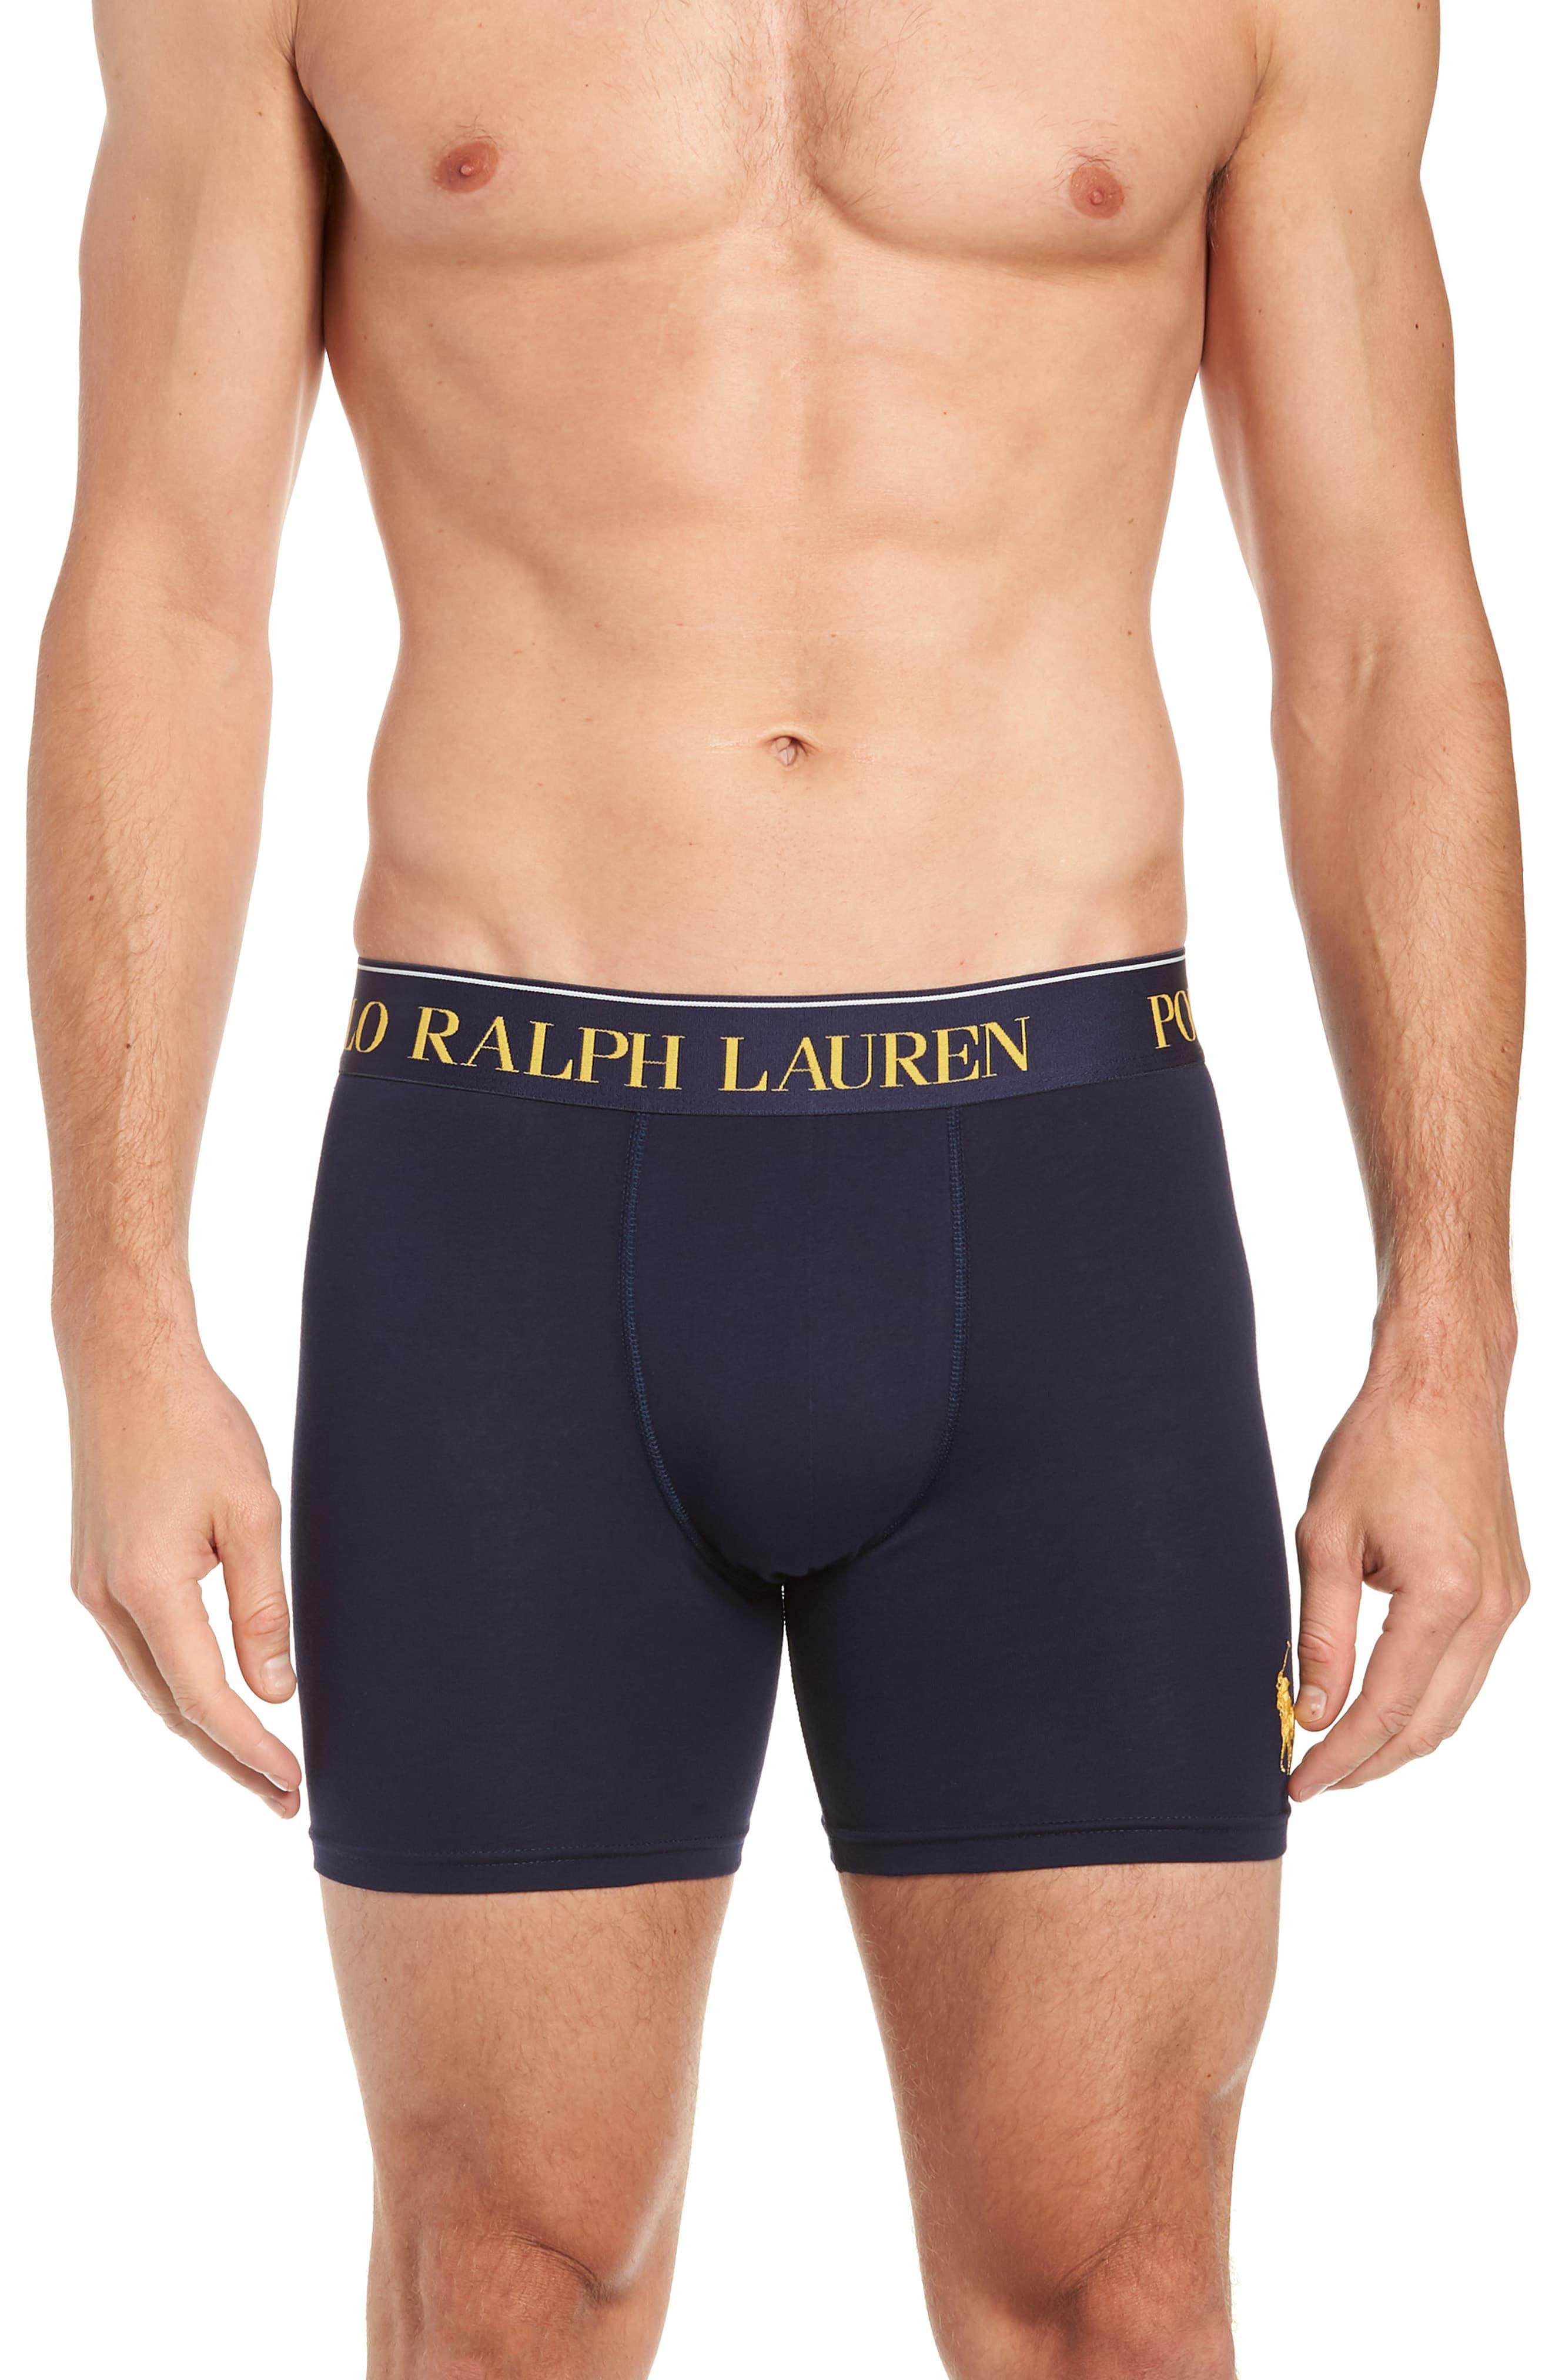 Polo Ralph Lauren Cotton Stretch Boxer Briefs in Blue for Men - Lyst